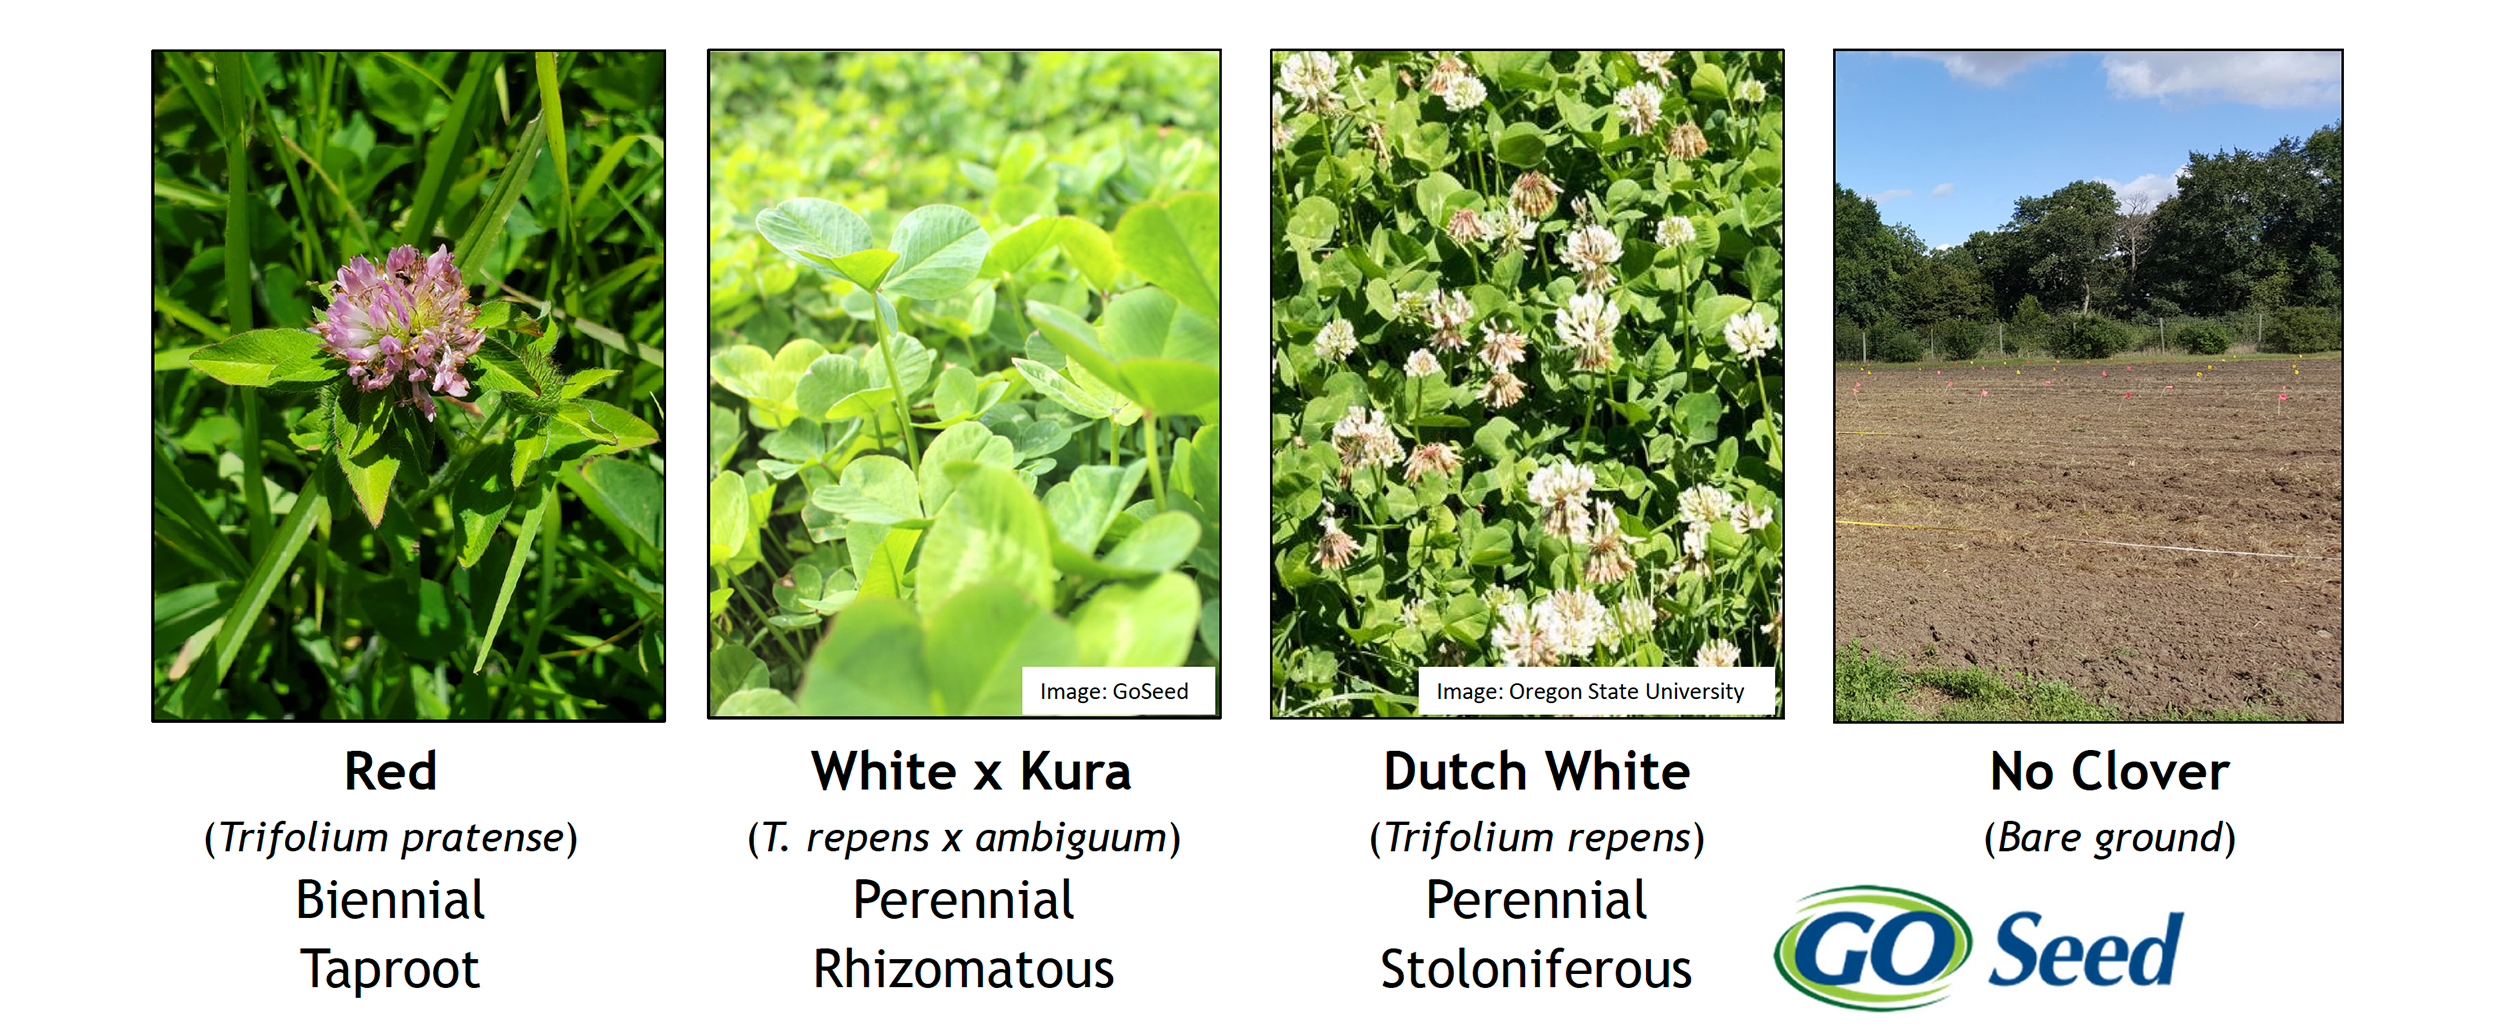 Red (Trifolium pratense) Biennial Taproot, White x Kura (T. repens x ambiguum)Perennial Rhizomatous, Dutch White (Trifolium repens) Perennial Stoloniferous, and a bare-ground control plot with no clovers.